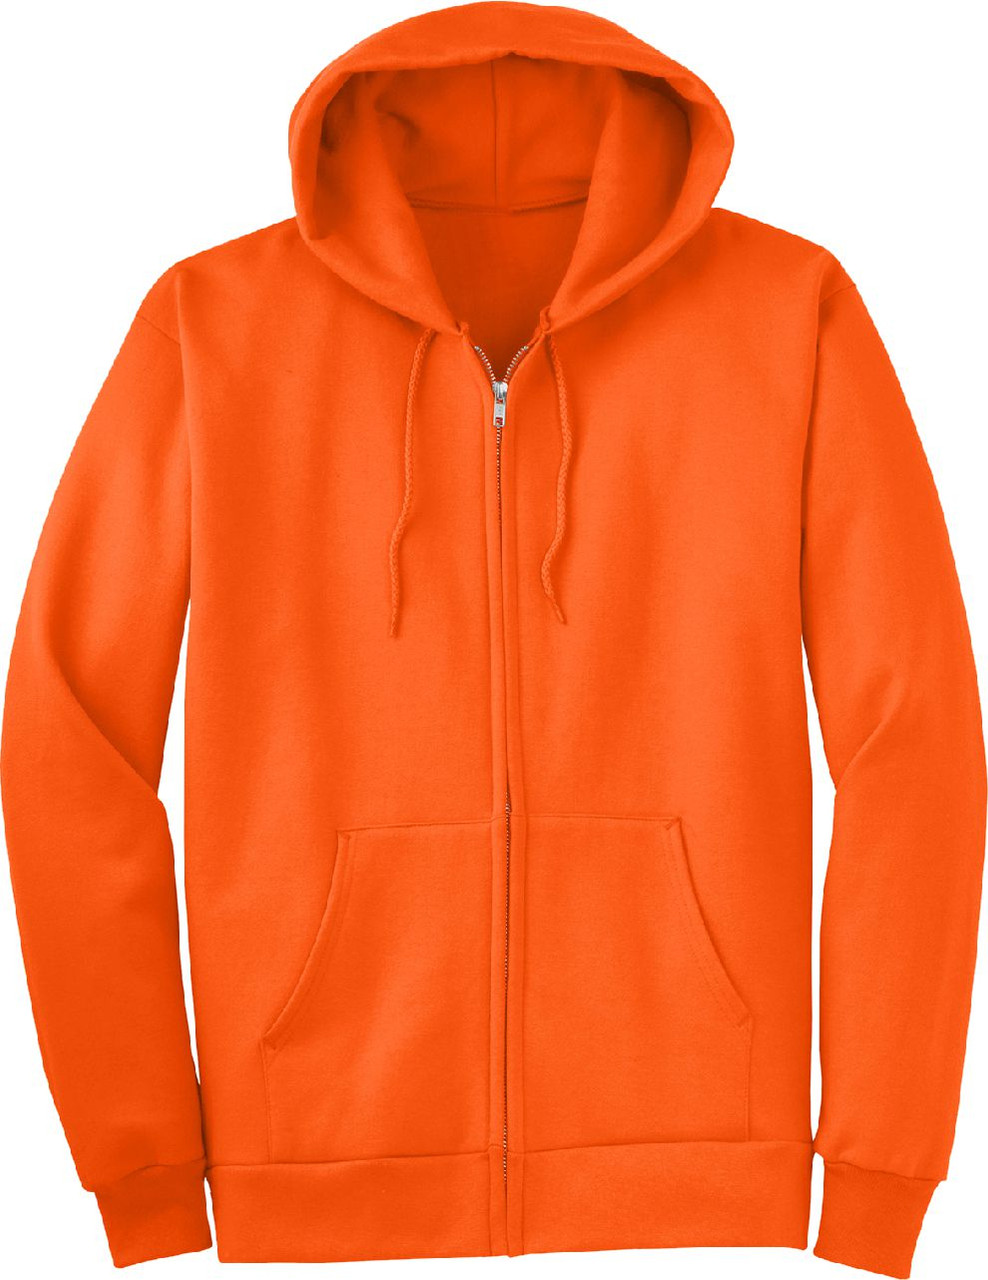 Safety Orange Fleece Hooded Zip Up Sweatshirt *Custom Printing